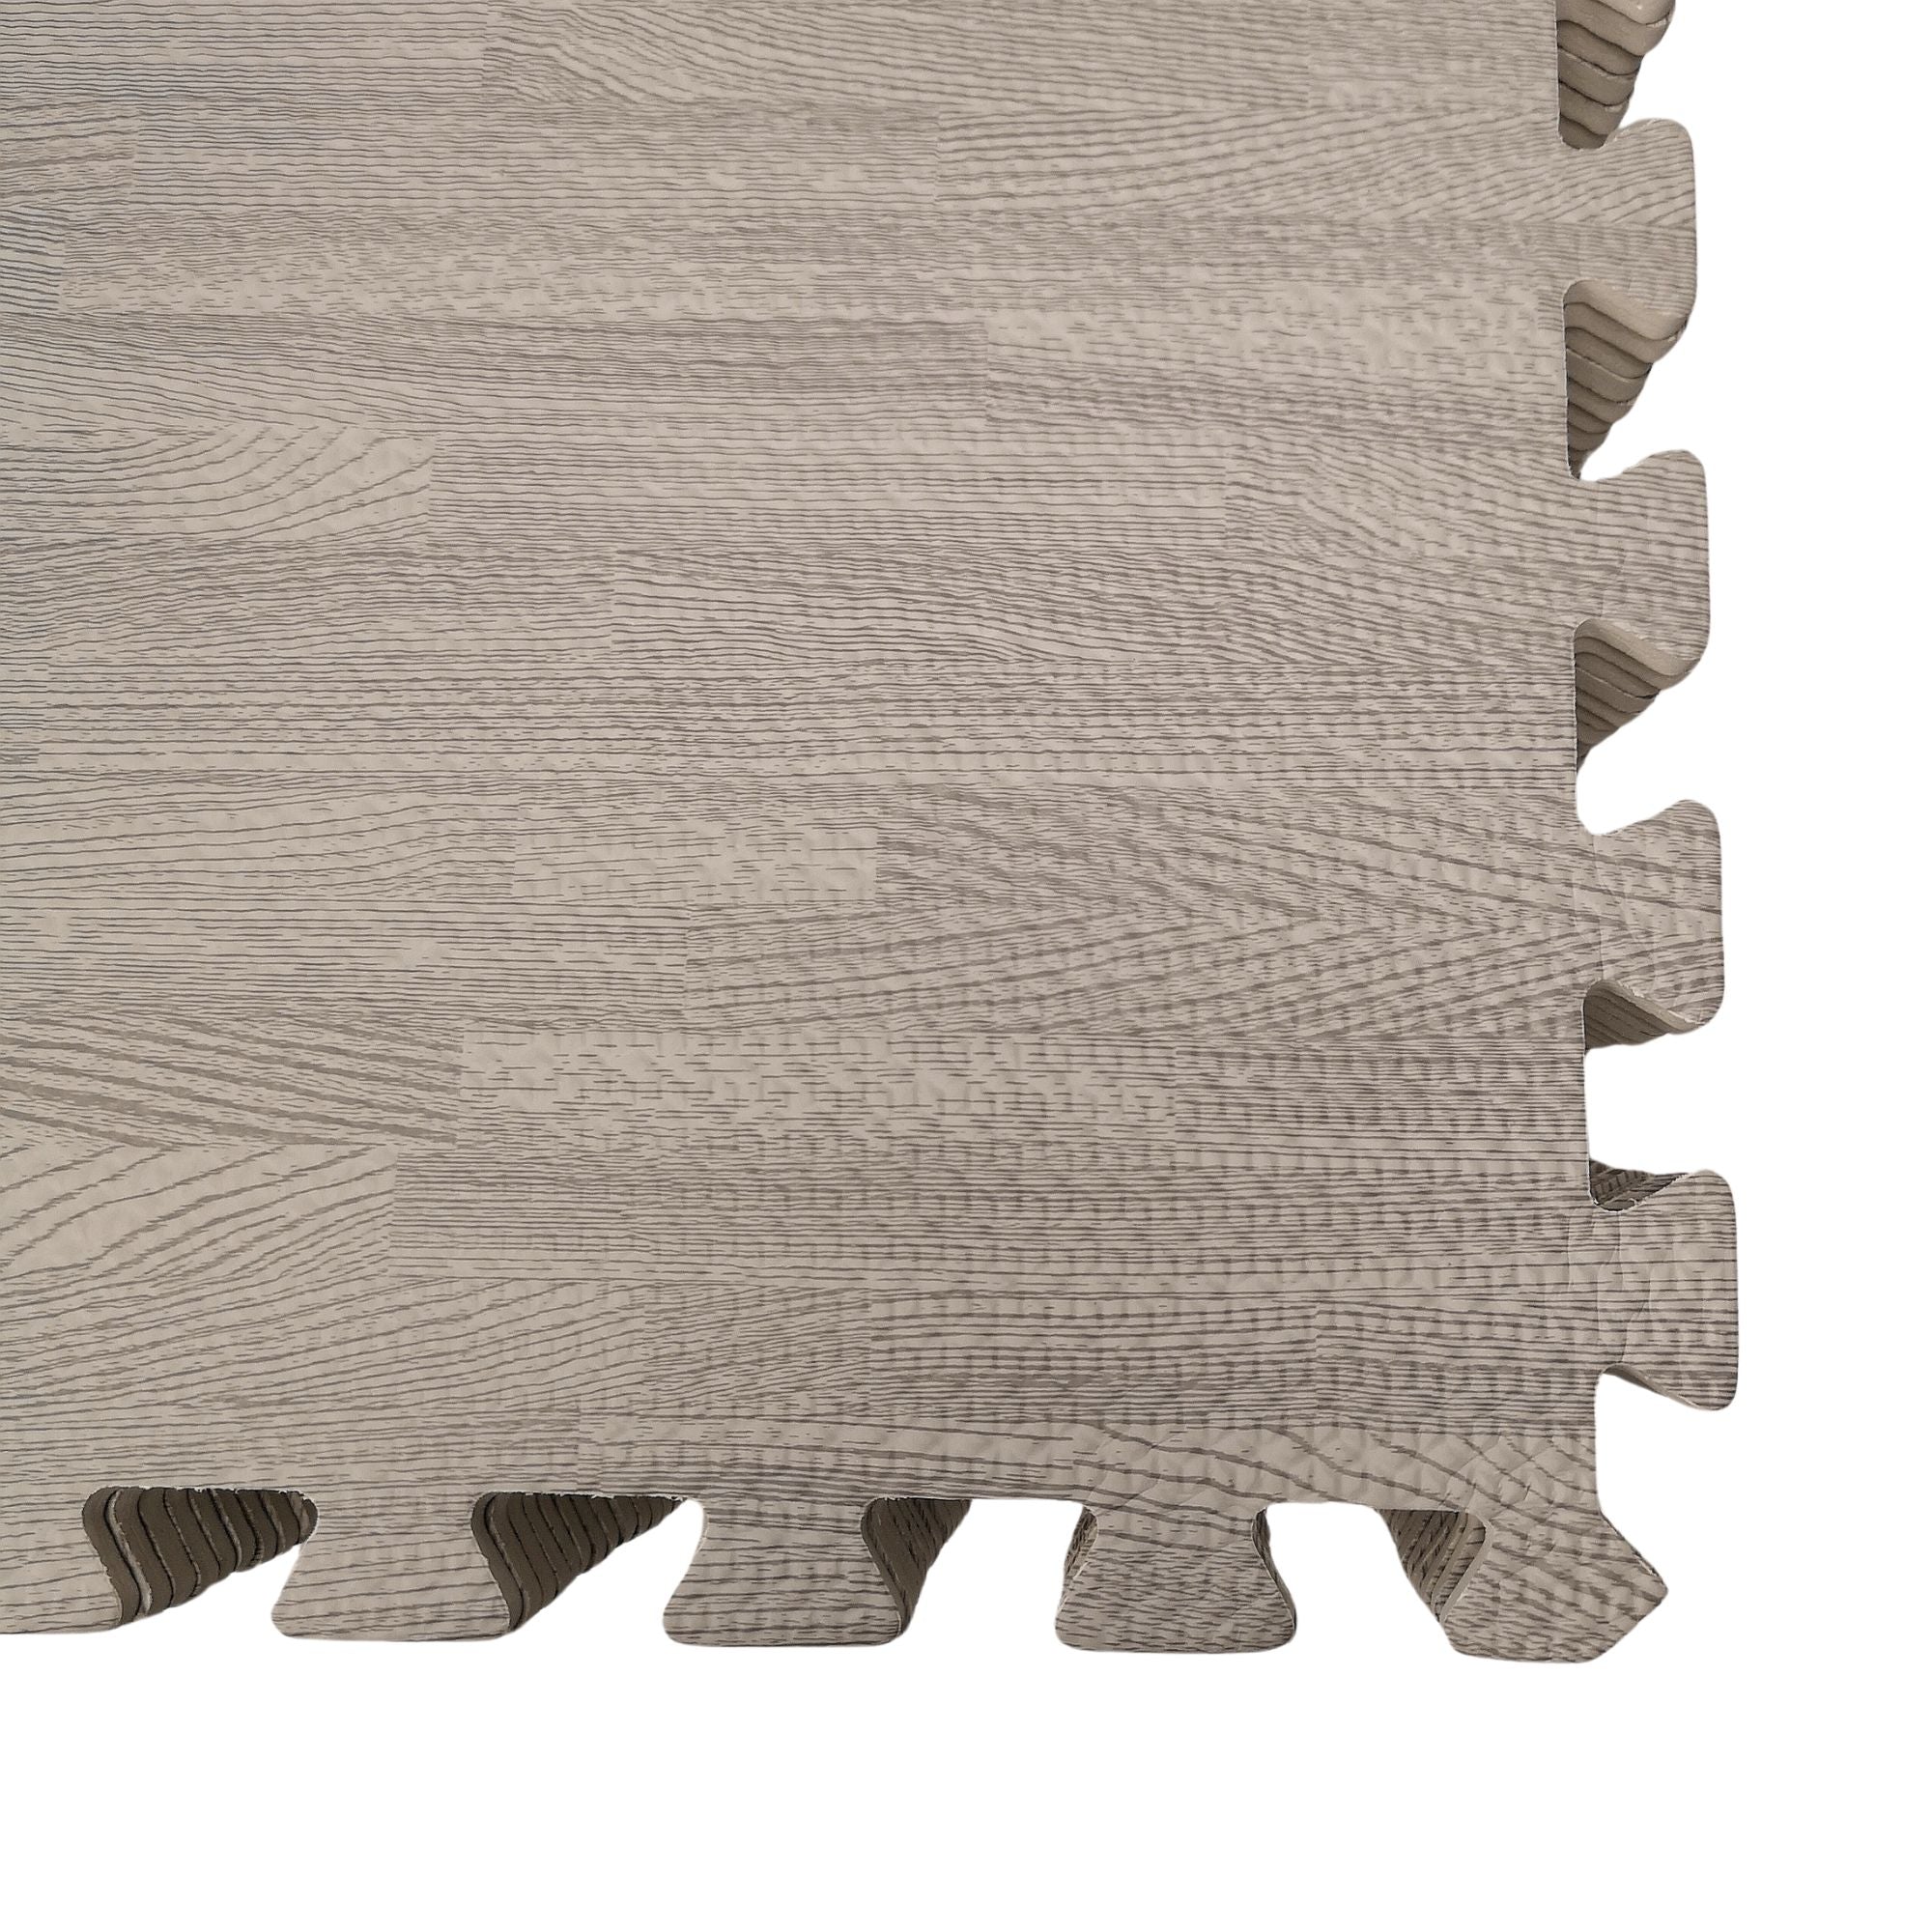 16 Piece Grey Wood Effect EVA Foam Floor Protective Floor Tiles / Mats 60x60cm Each Set For Gyms, Kitchens, Garages, Camping, Kids Play Matting, Floor Mats Set Covers 5.76 sqm (62 sq ft)